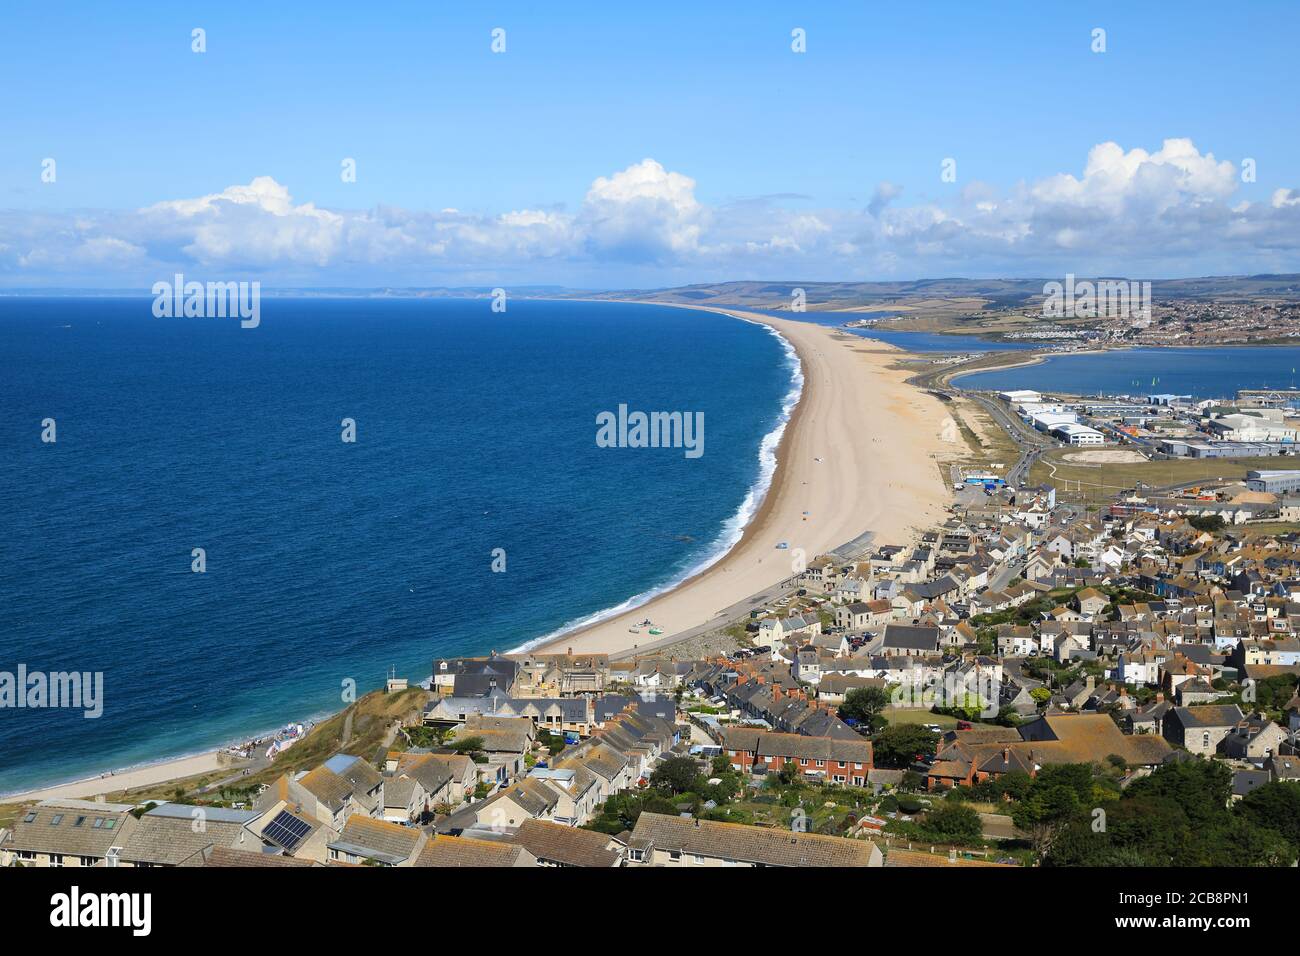 Chesil beach, Dorset - Stock Image - E280/0343 - Science Photo Library